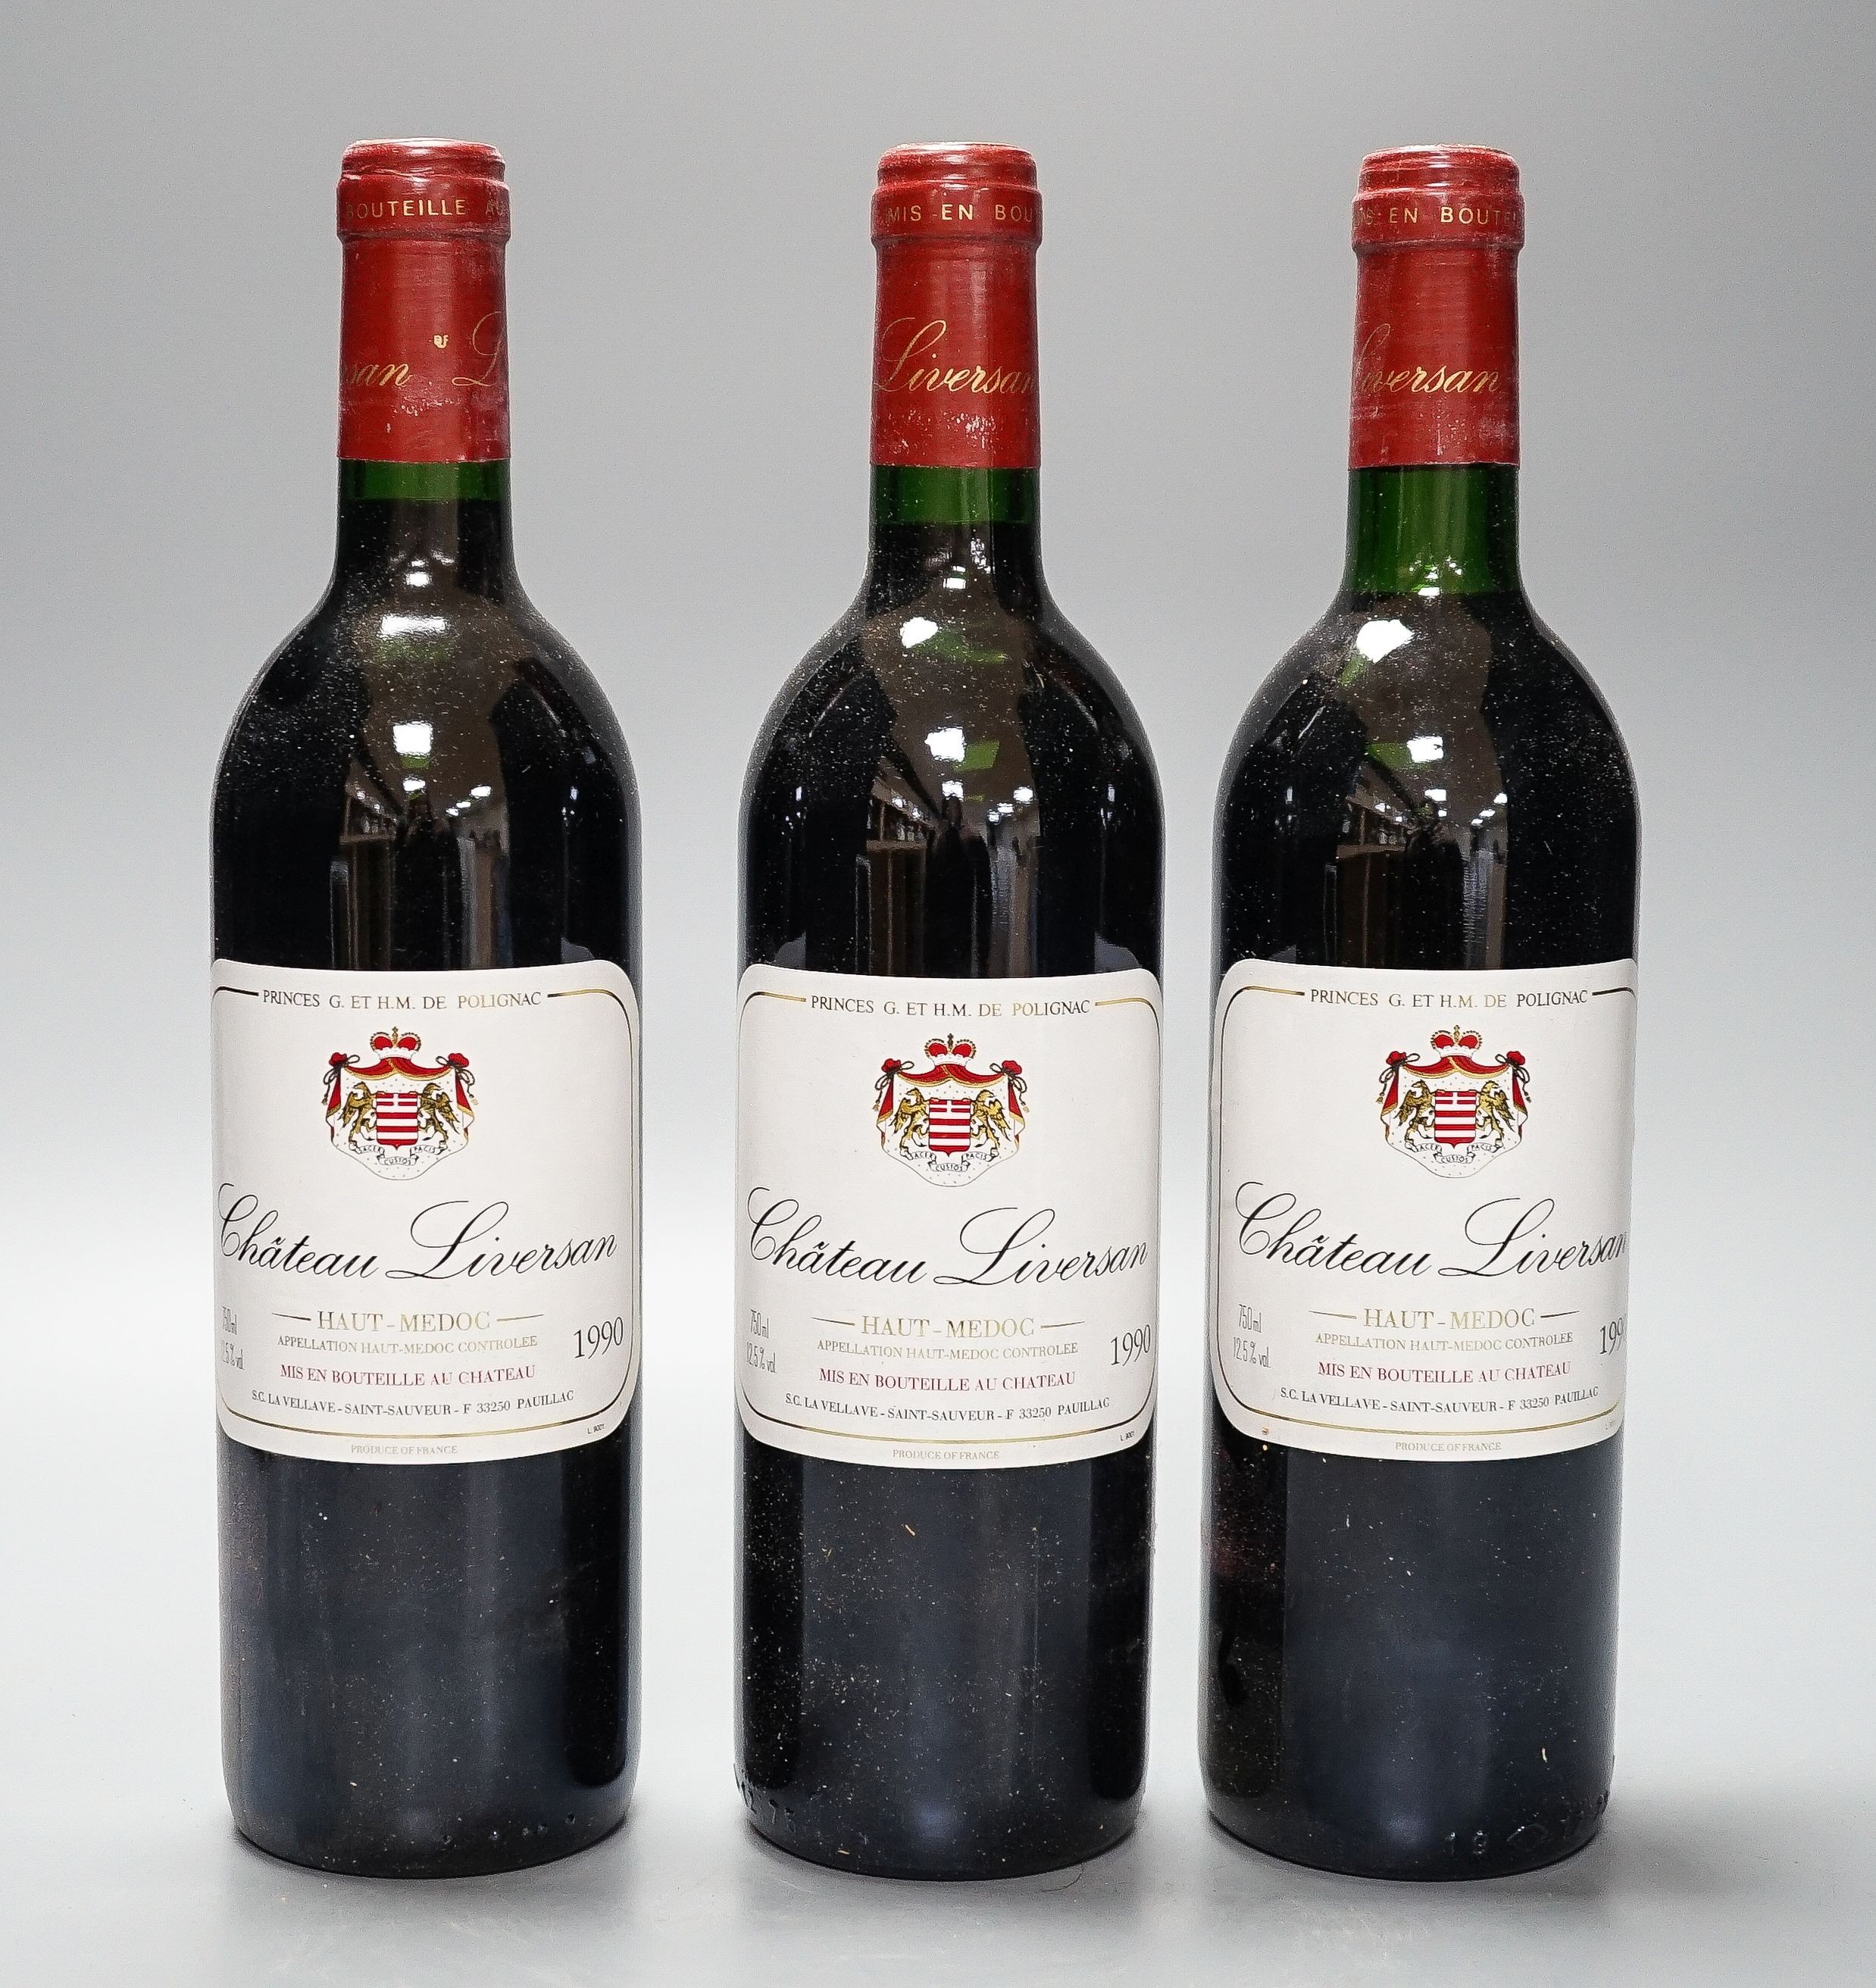 Six bottles of Chateau Liversan - Haut Medoc, 1990, 75cl.